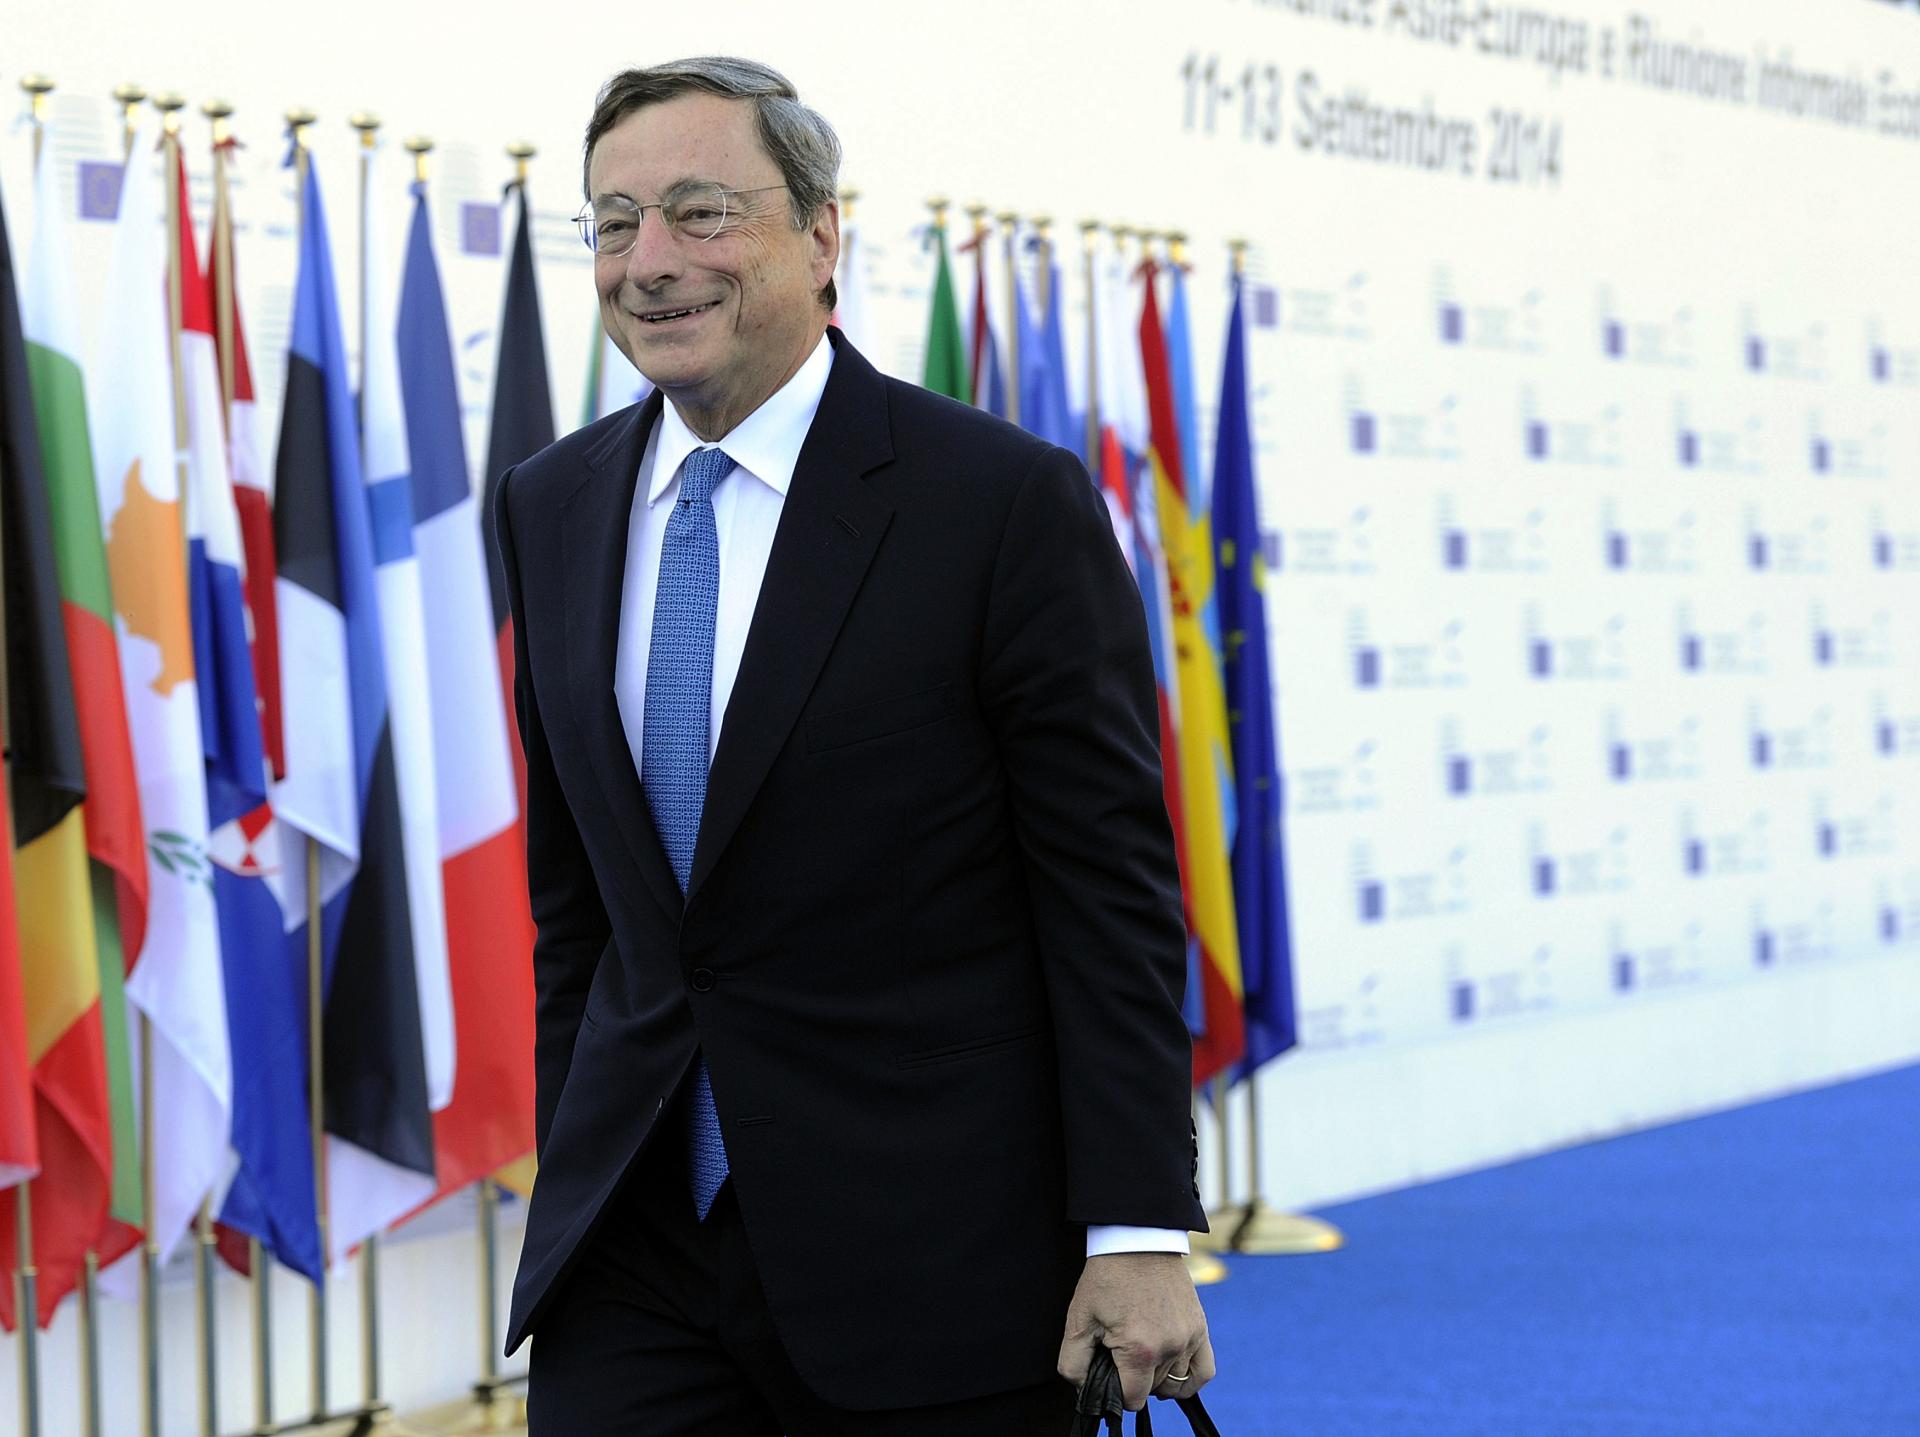 Iskra preskočila Atlantik aj Pacifik a Draghi uštedril lekciu Bidenovi